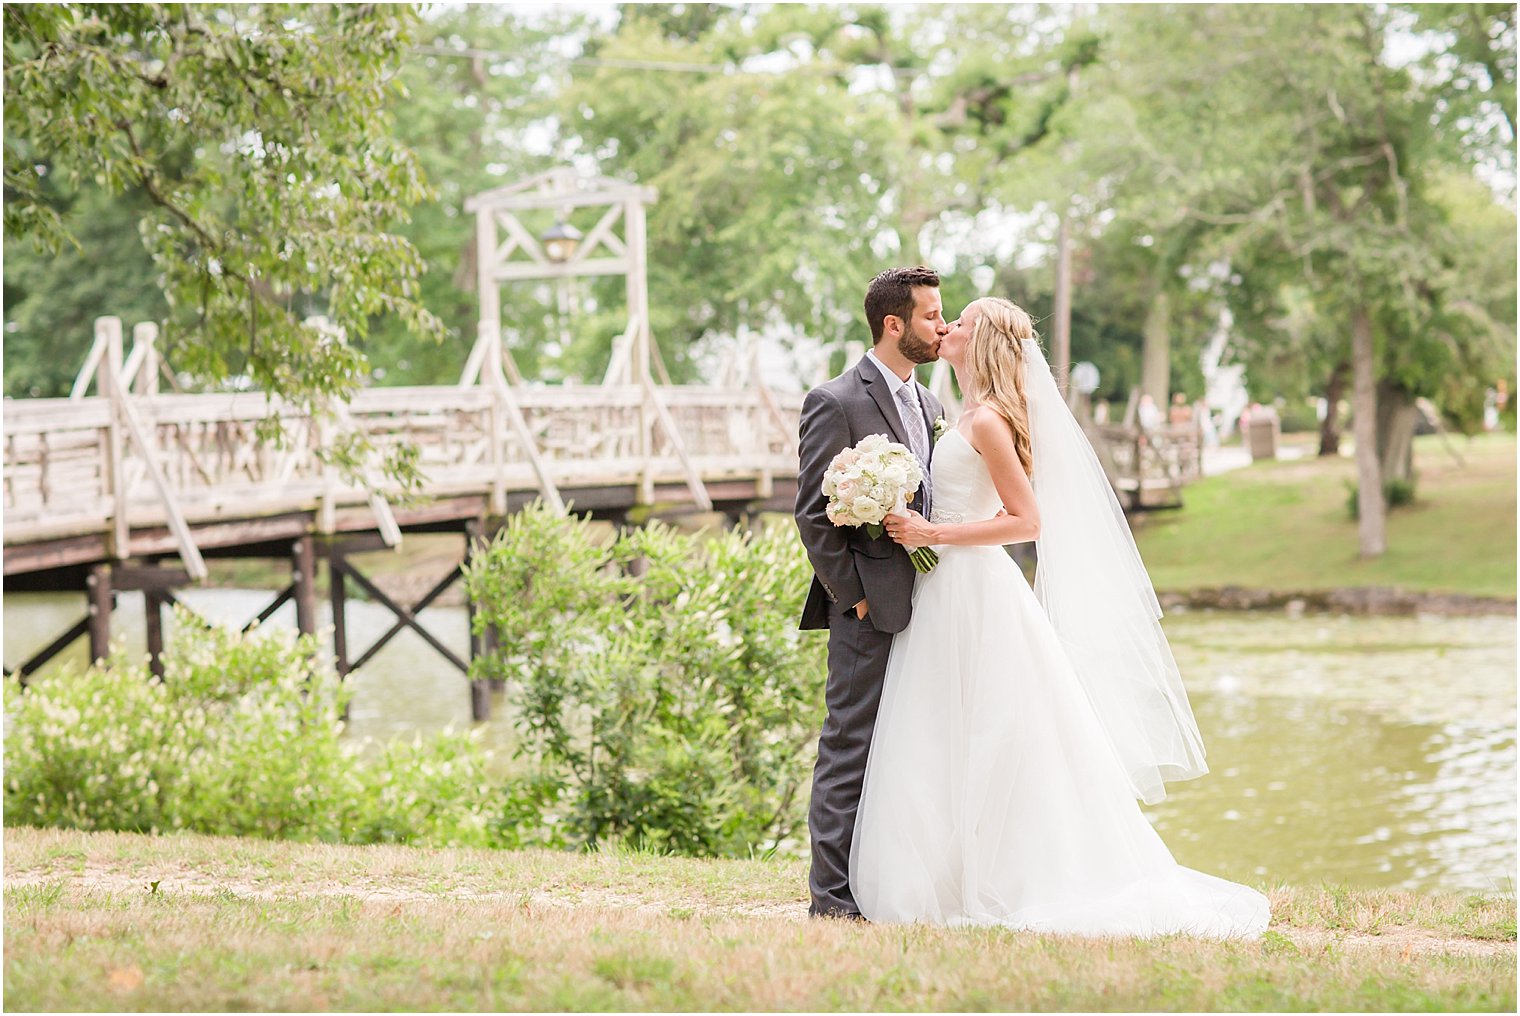 Divine Park Spring Lake Park Wedding Photos | Idalia Photography